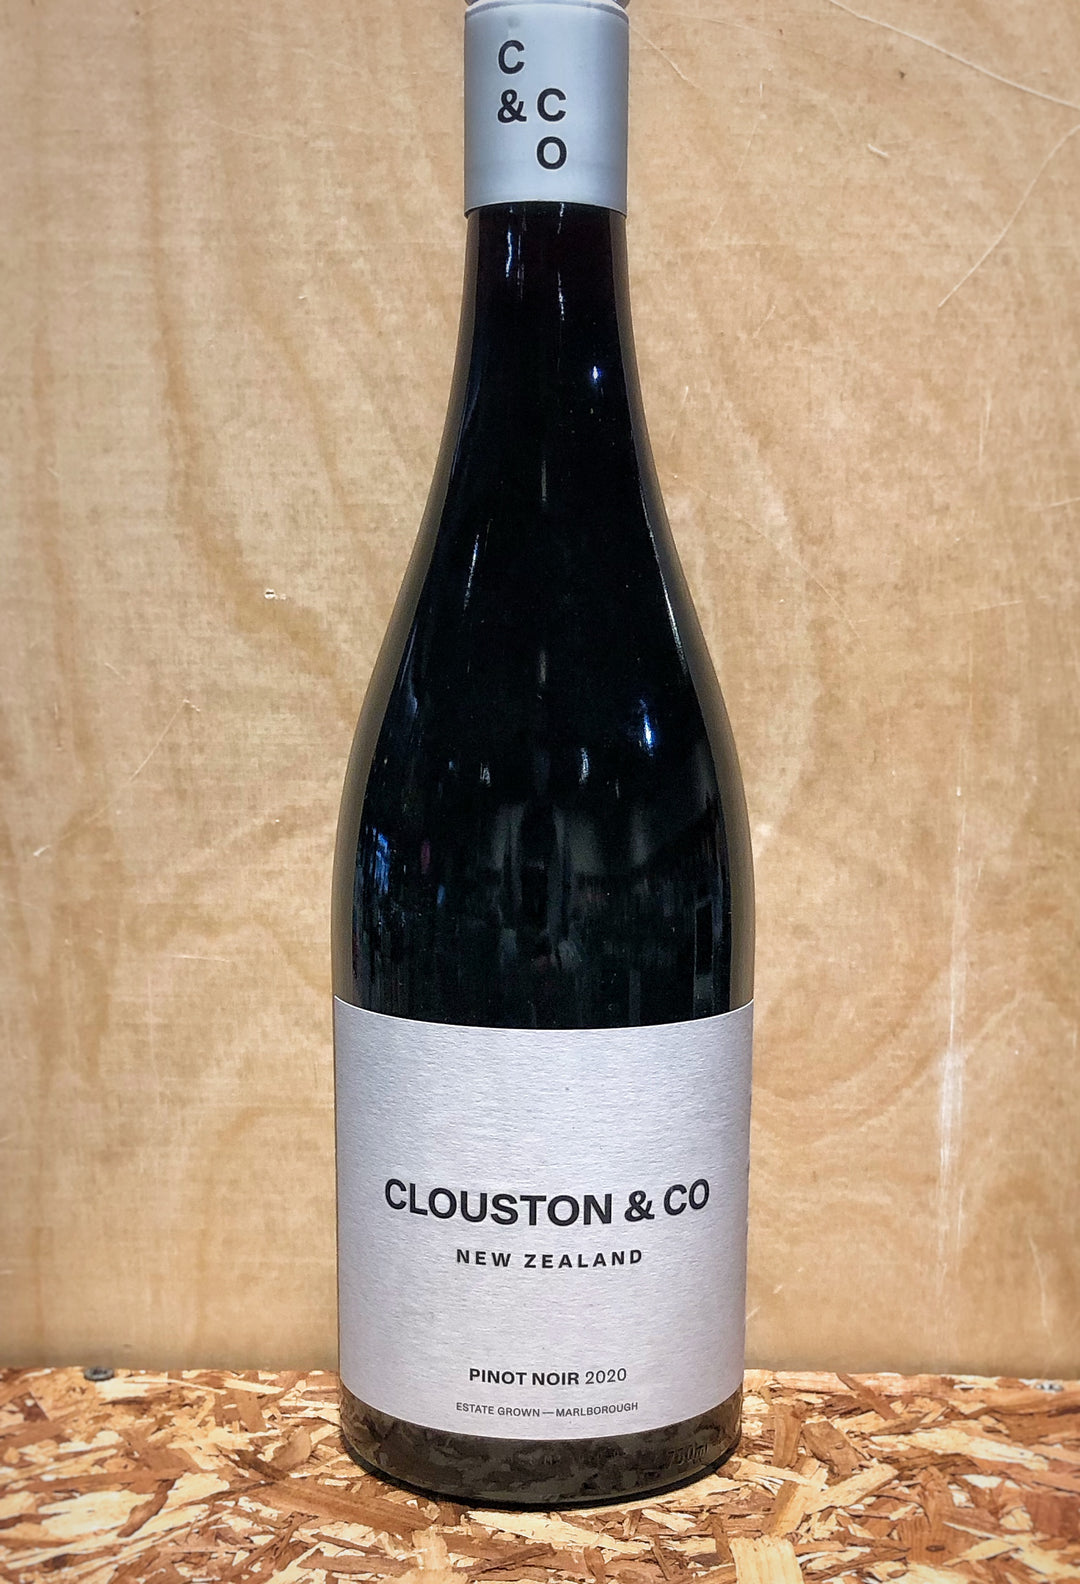 Clouston & Co Pinot Noir 2020 (Marlborough, New Zealand)